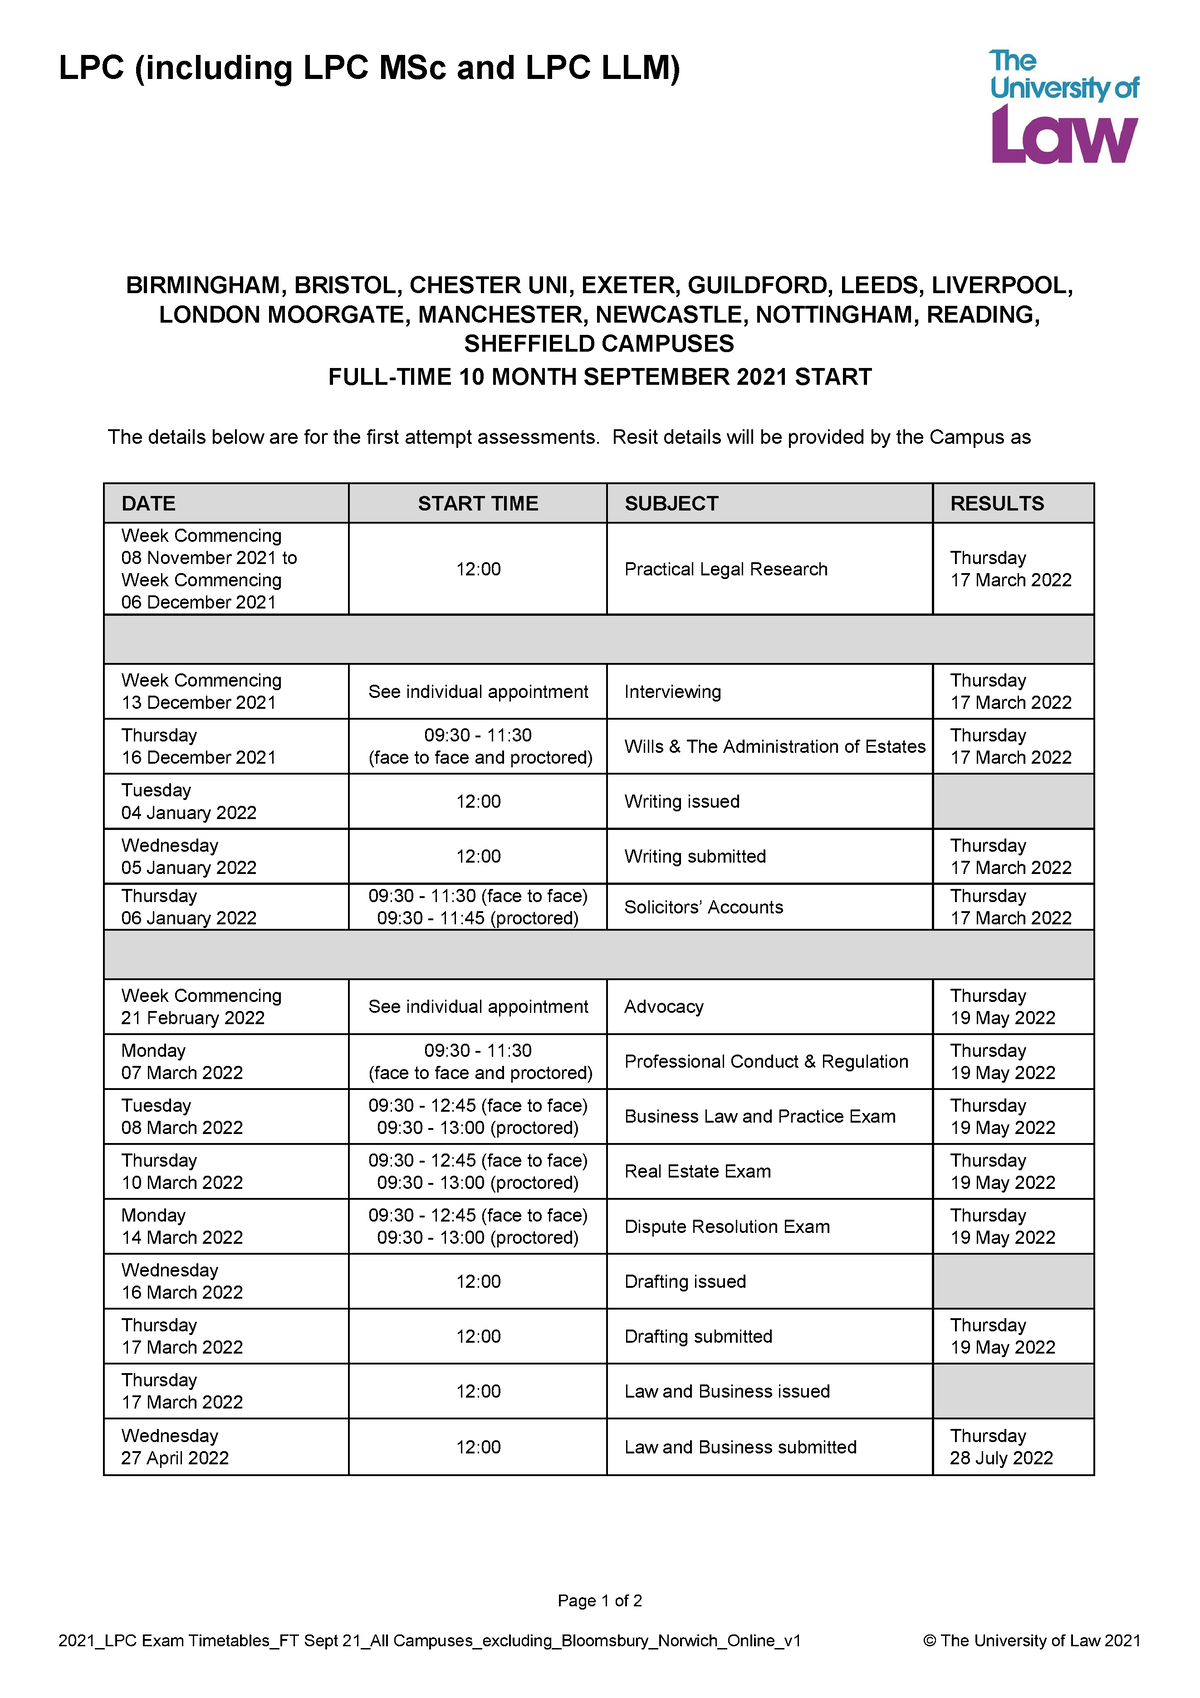 LPC Exam timetable for uni of law LPC (including LPC MSc and LPC LLM